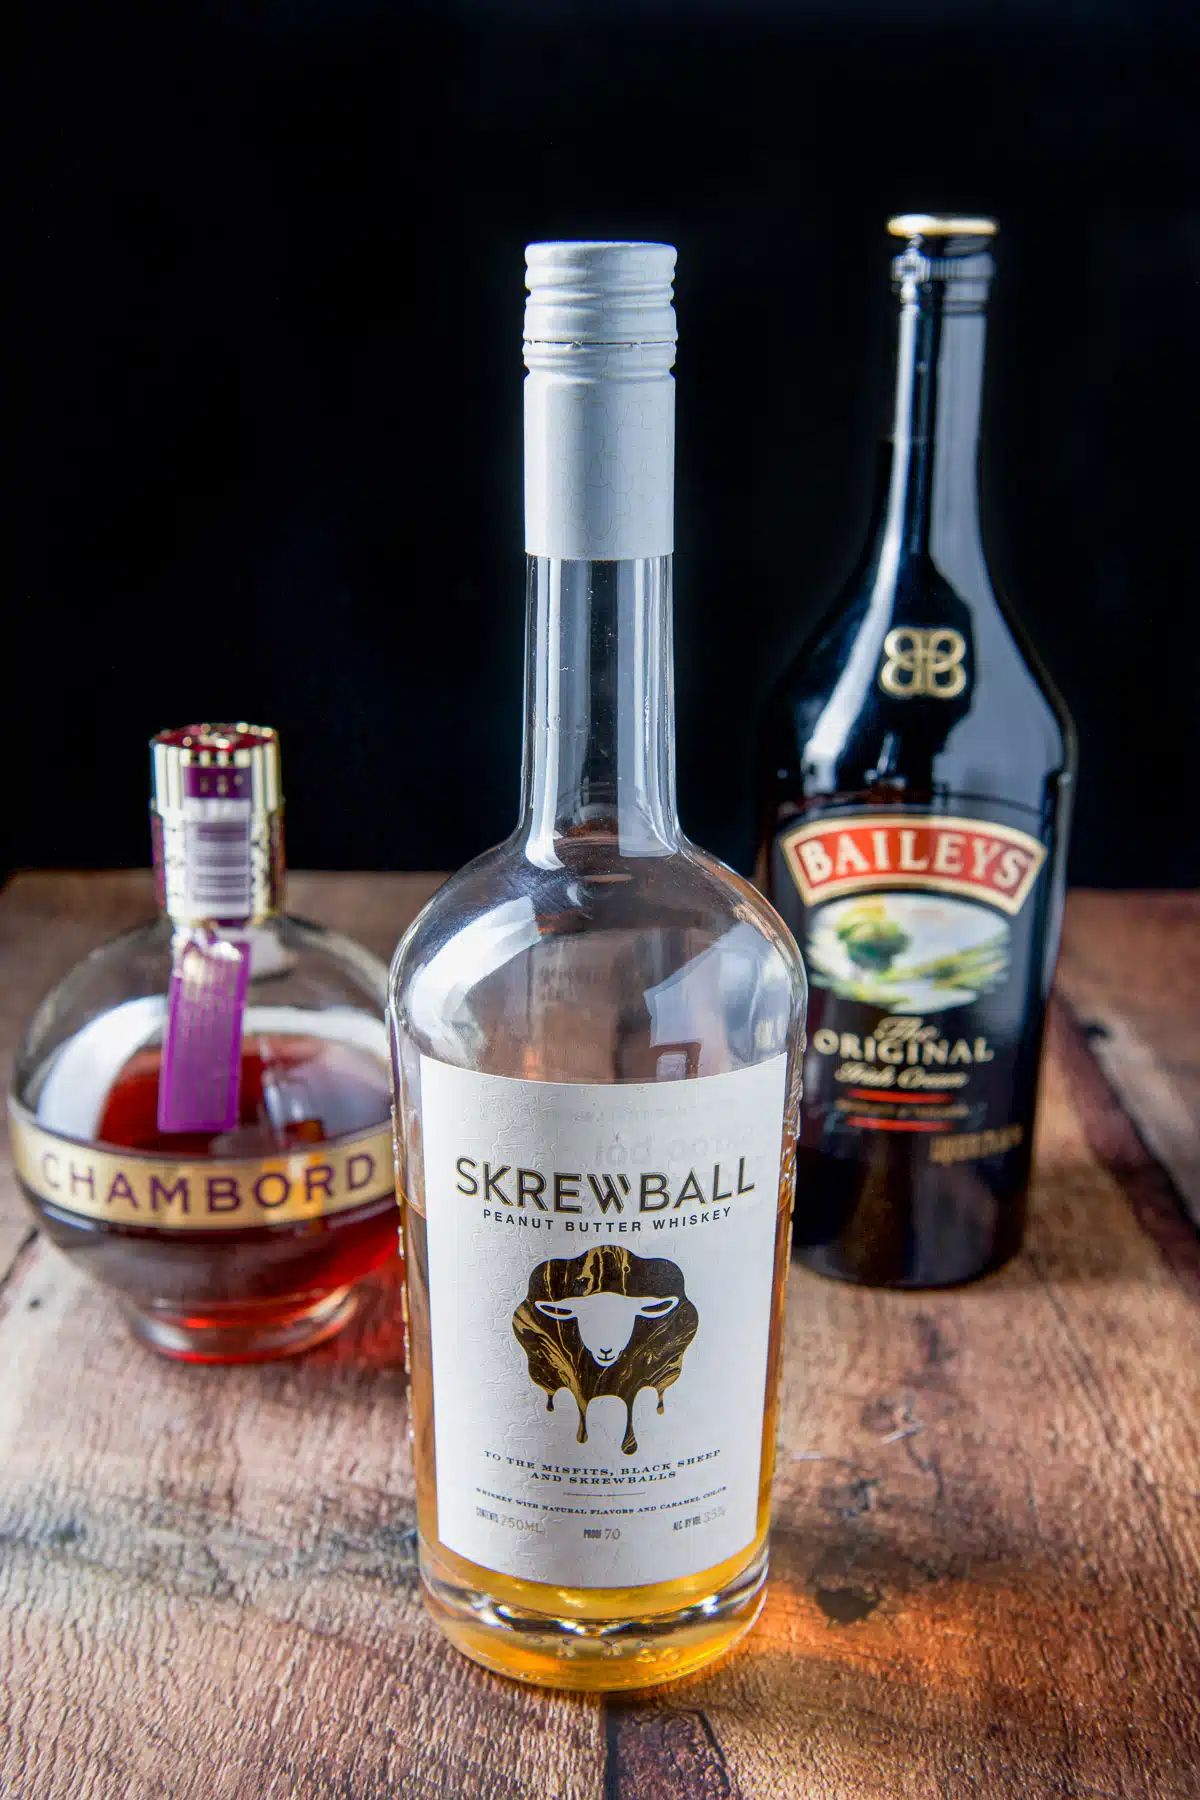 Skrewball whiskey, Chambord, and Baileys Irish cream on a wood table